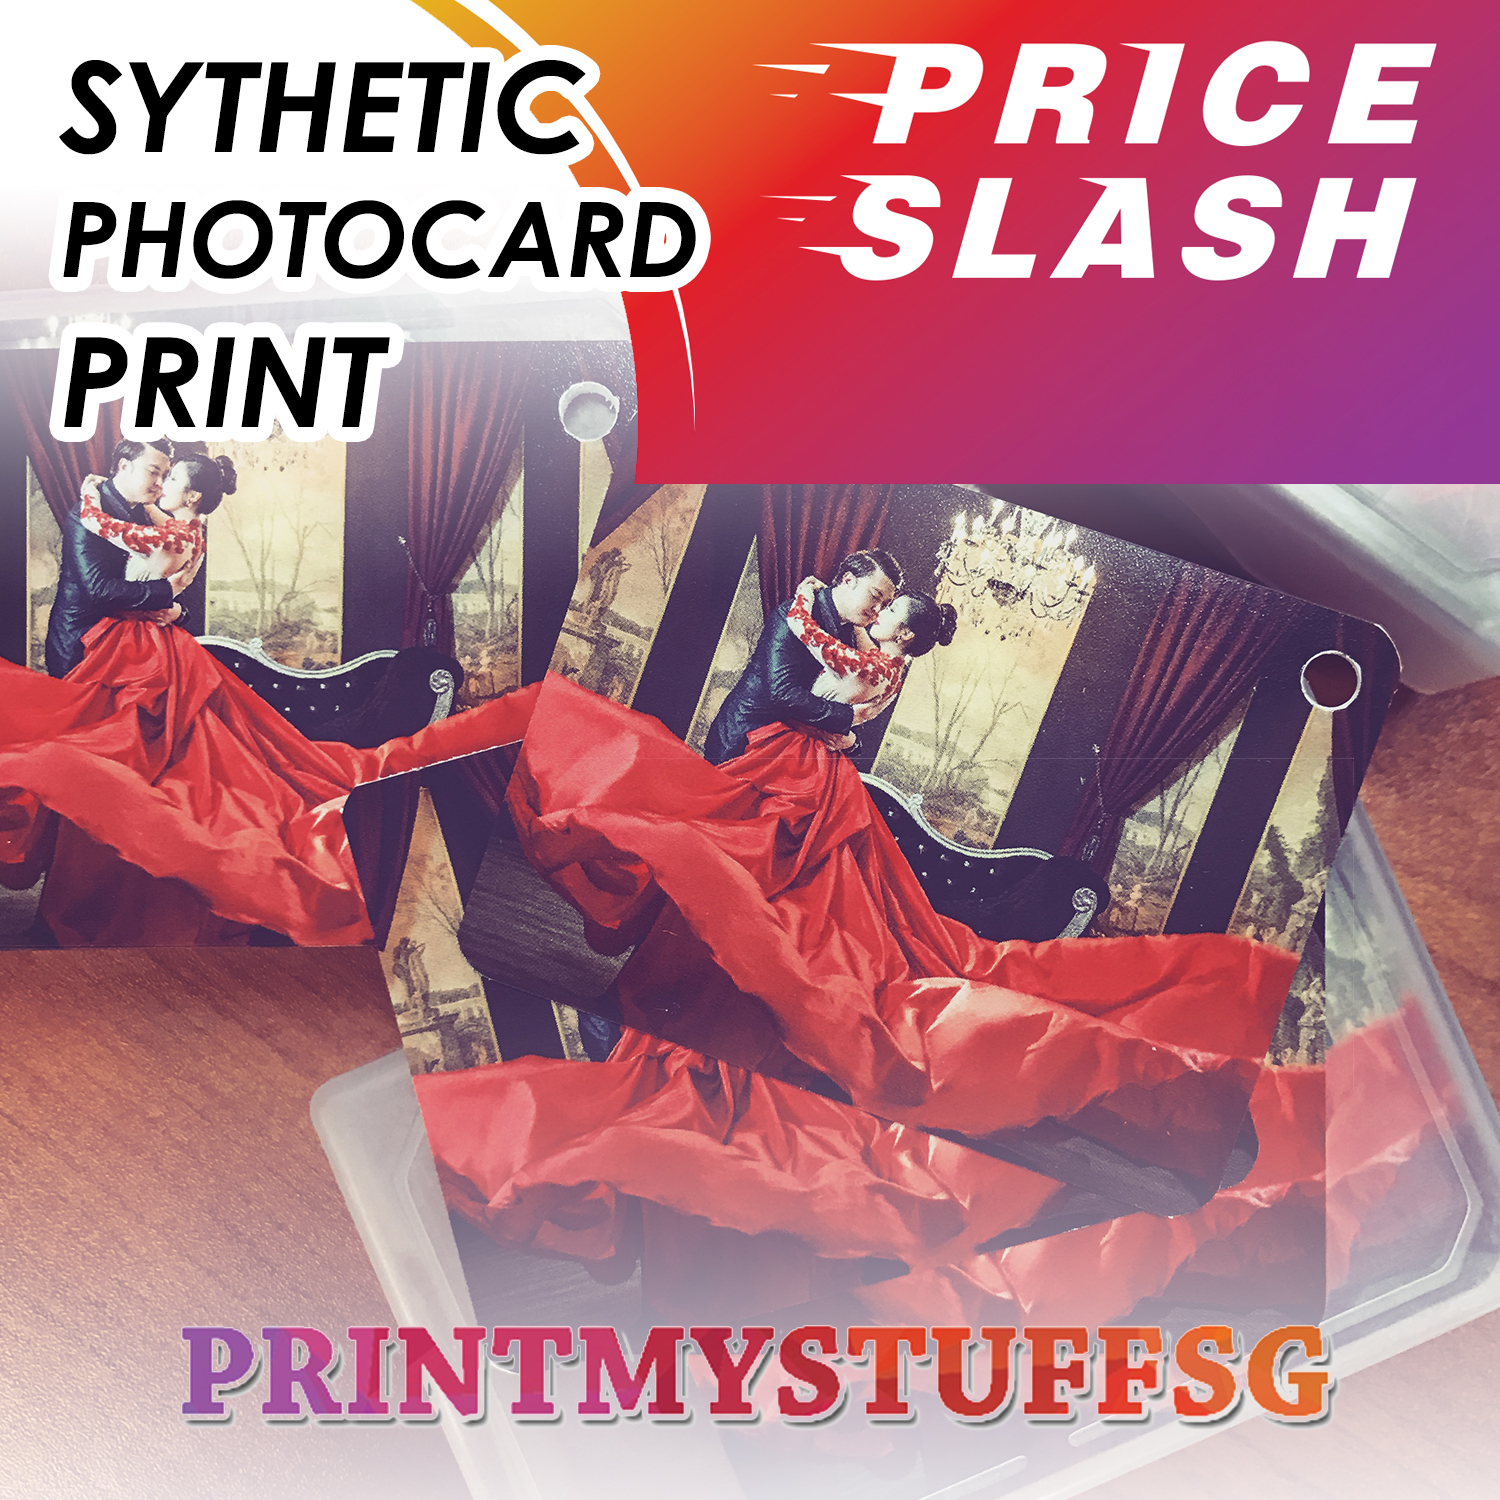 syntheticphotocardprint